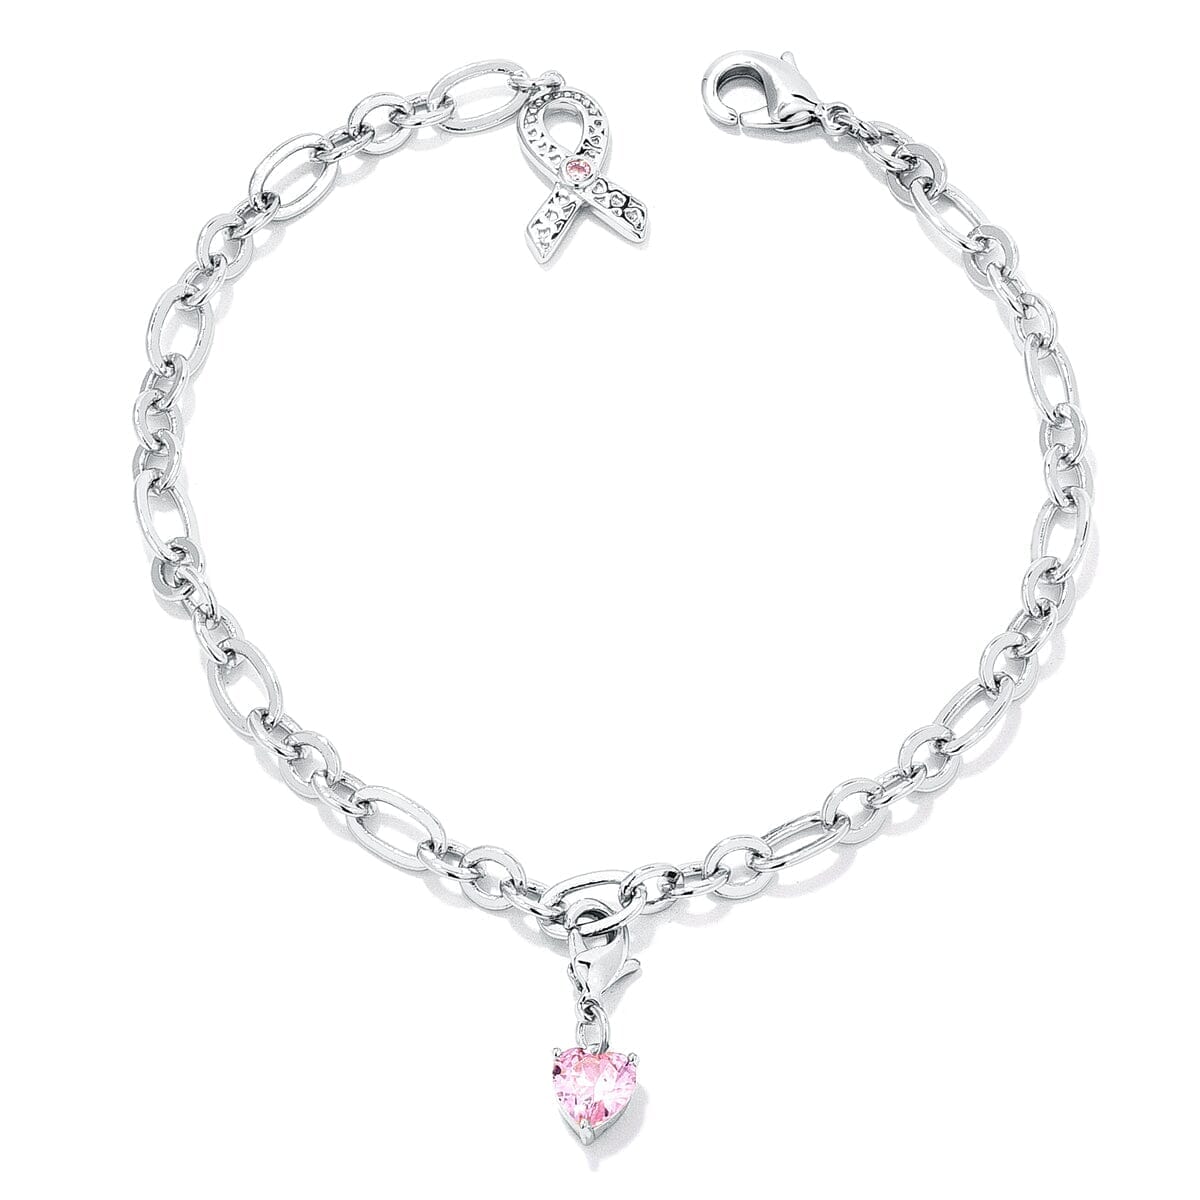 Breast Cancer Awareness Ribbon and Heart Charm Bracelet Bracelets Das Juwel 